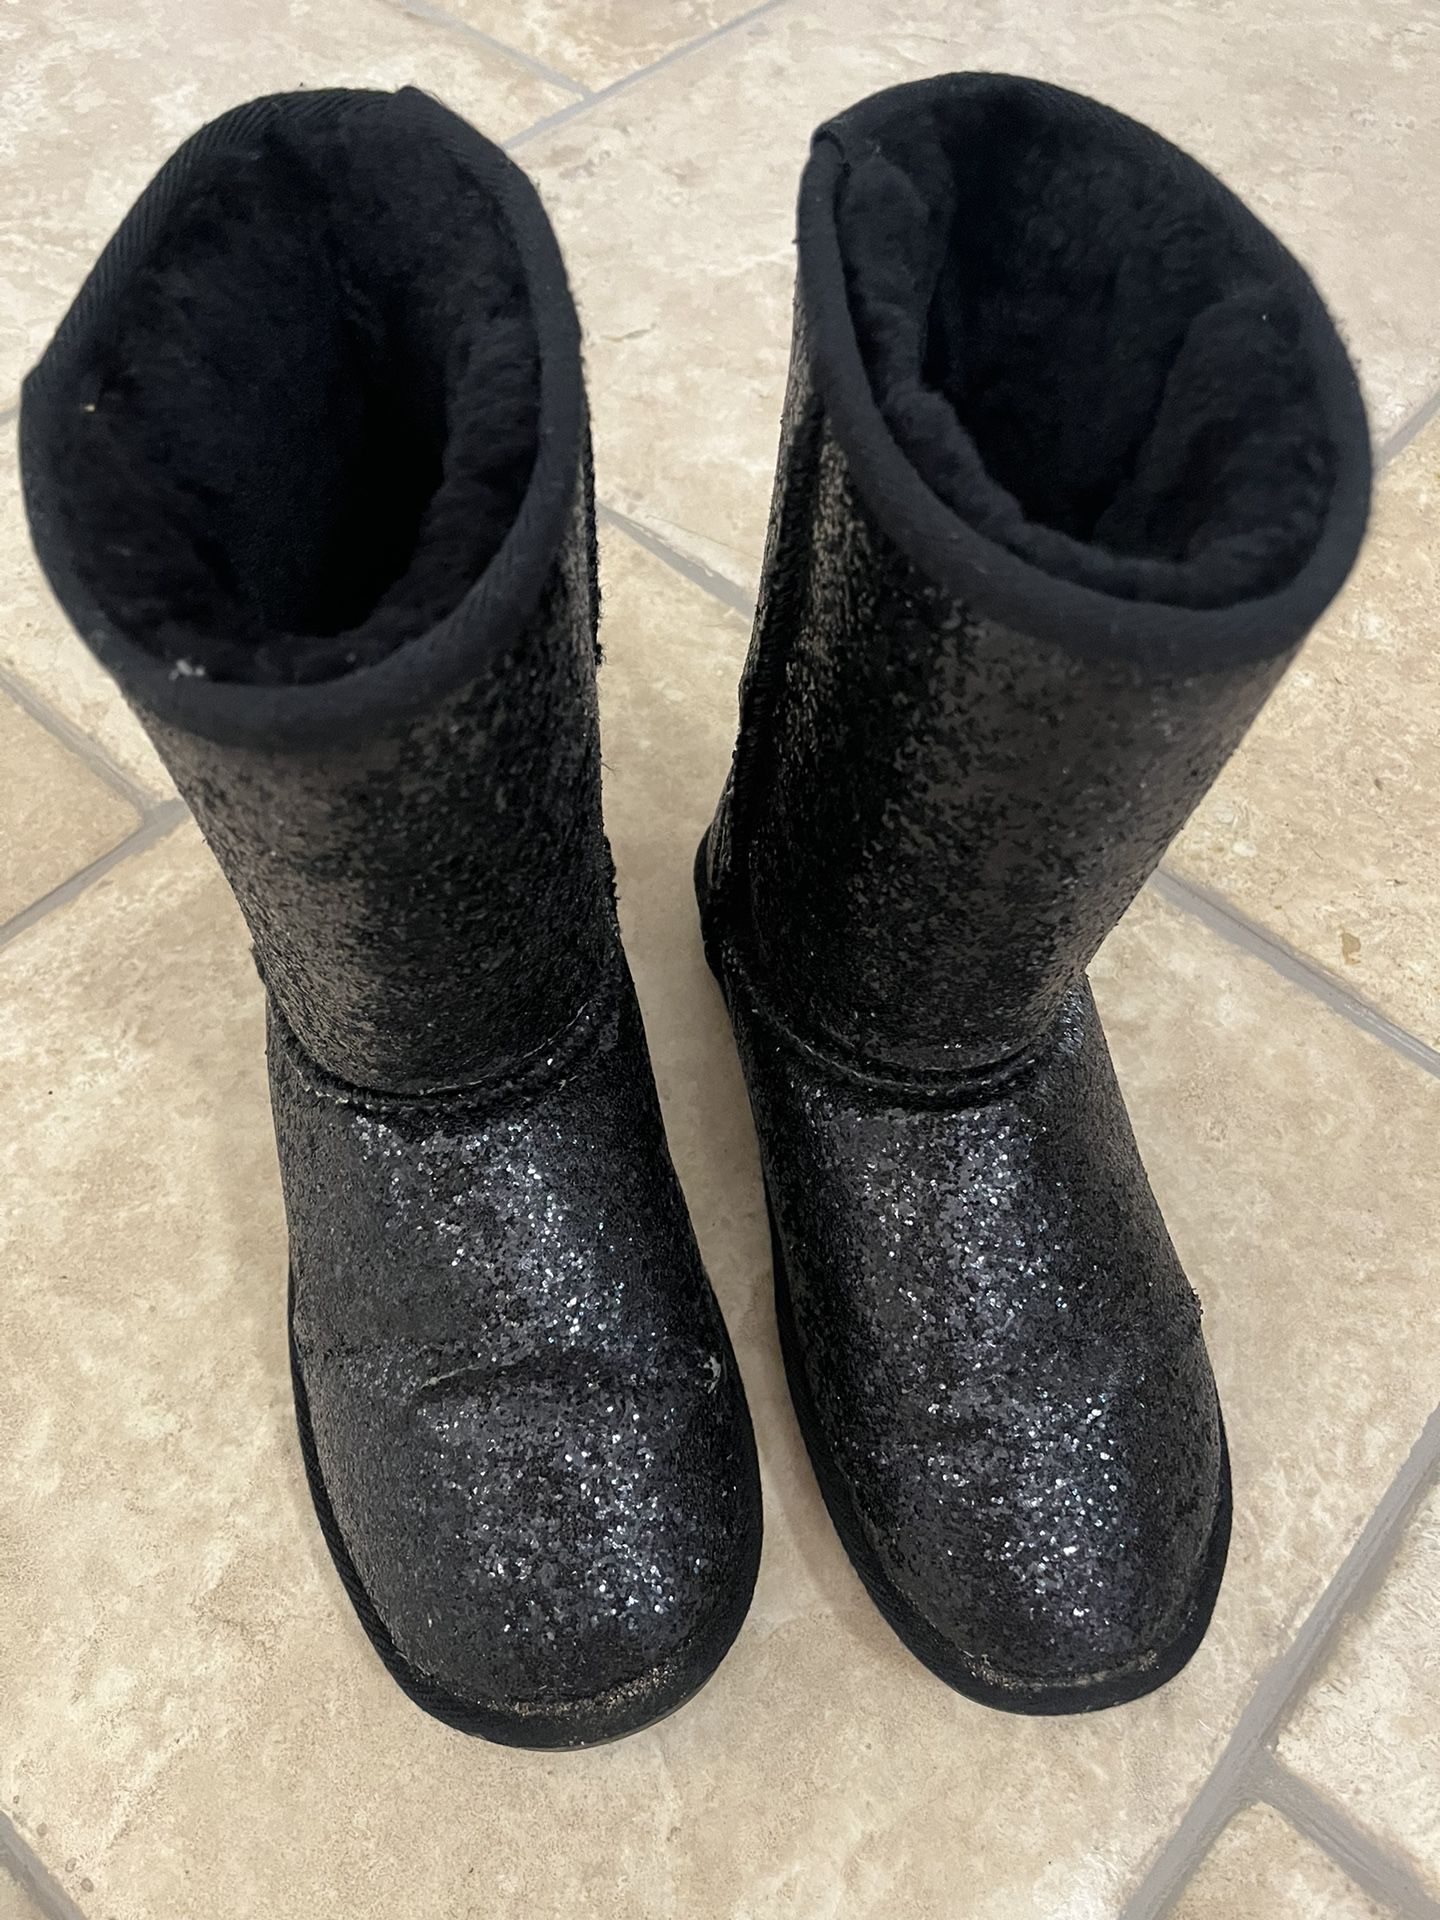 Glittery Black Bear Paws Fleece Lined Girls Boots